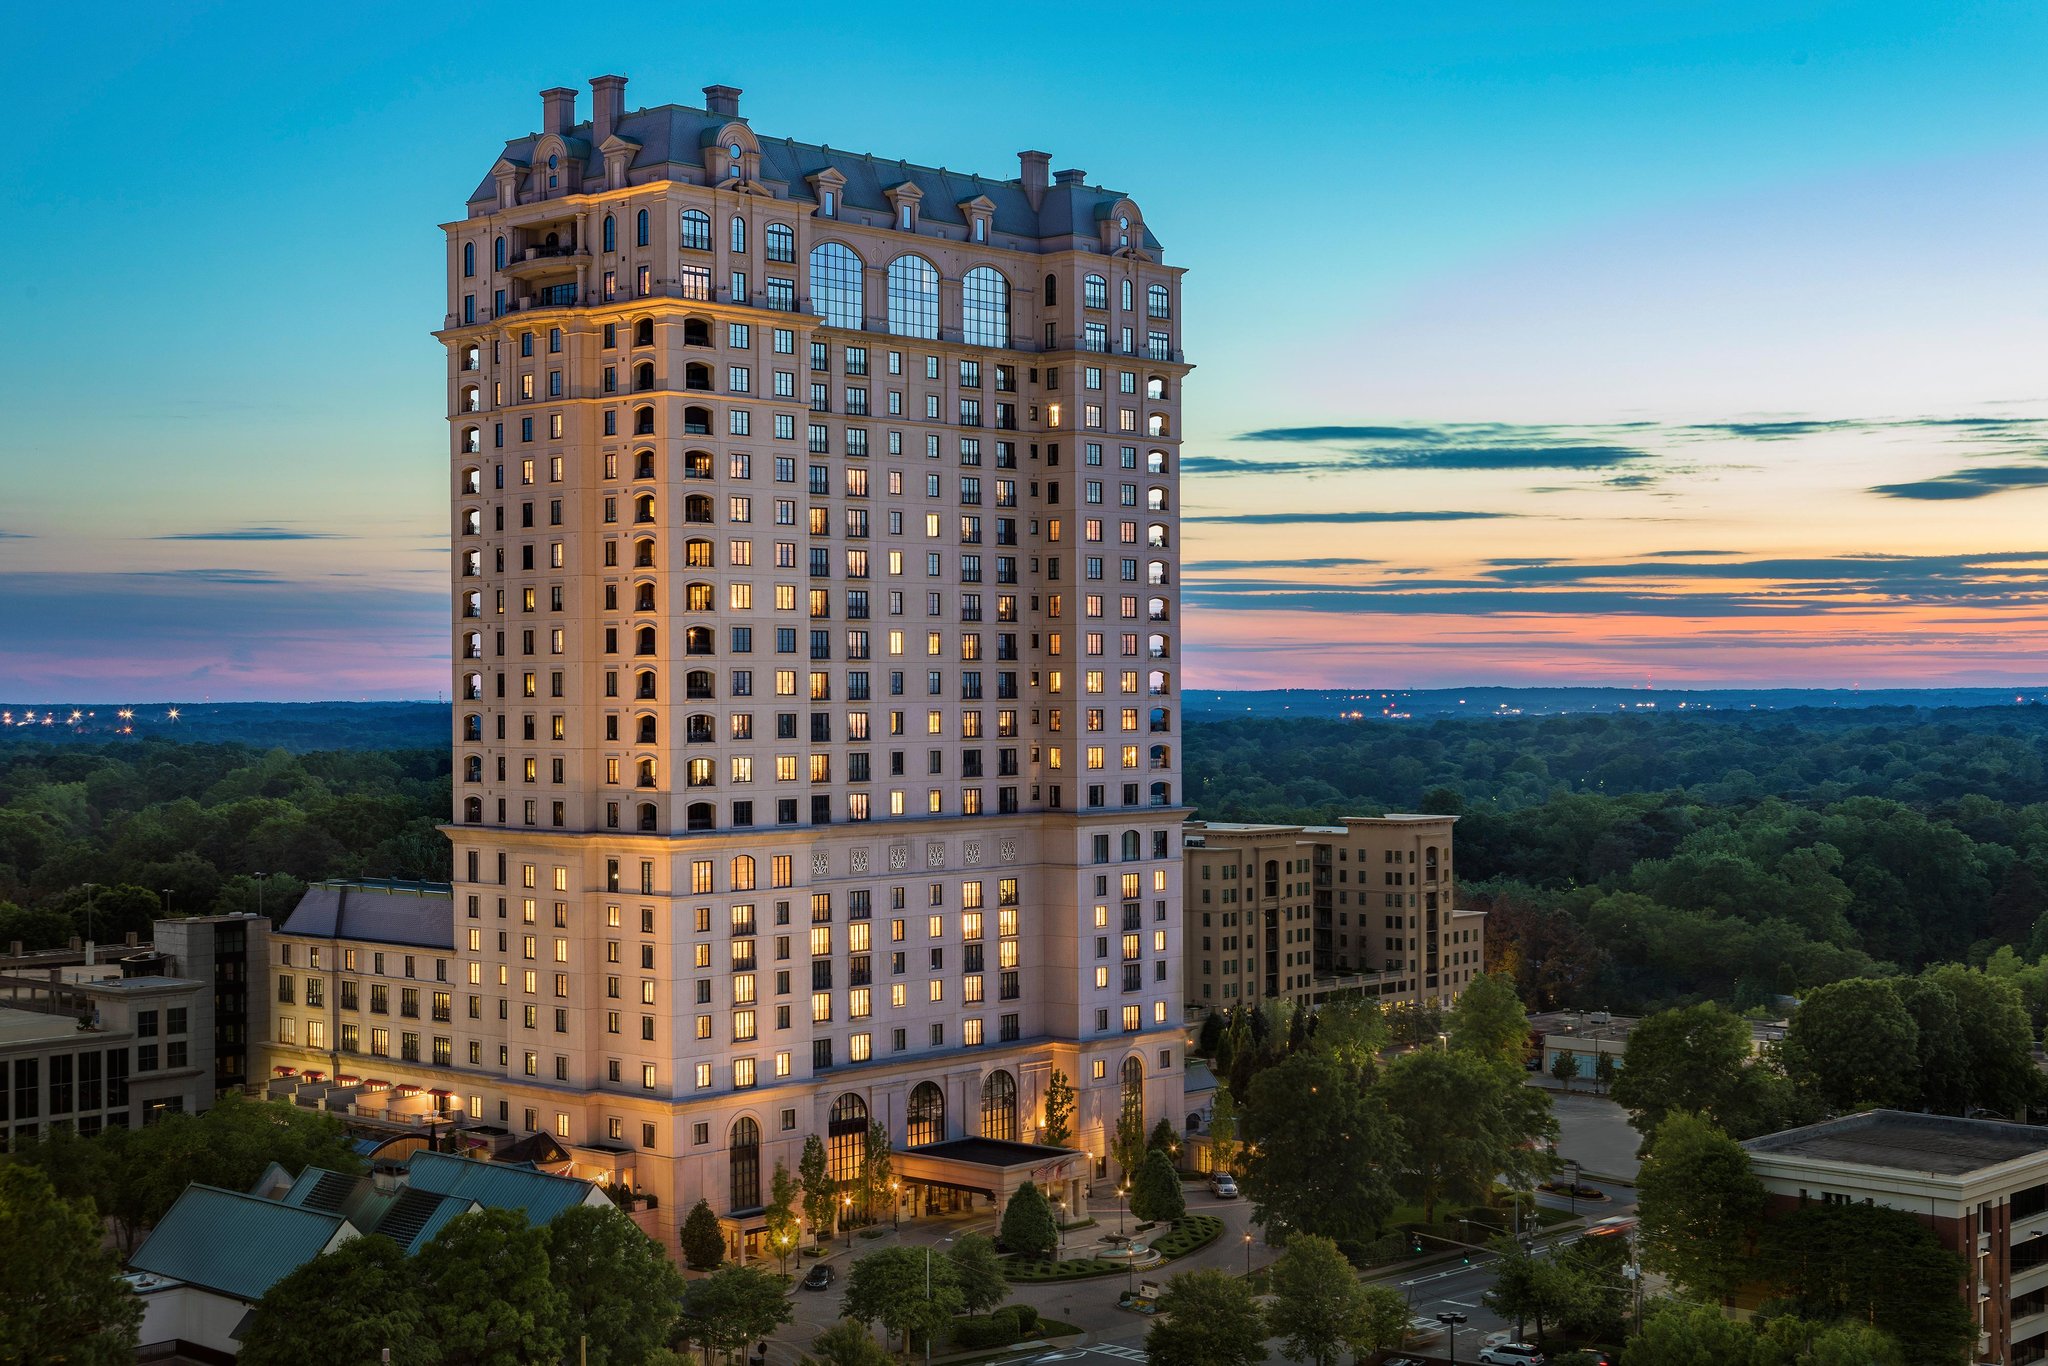 St. Regis luxury high-rise hotel in Buckhead neighborhood of Atlanta, GA